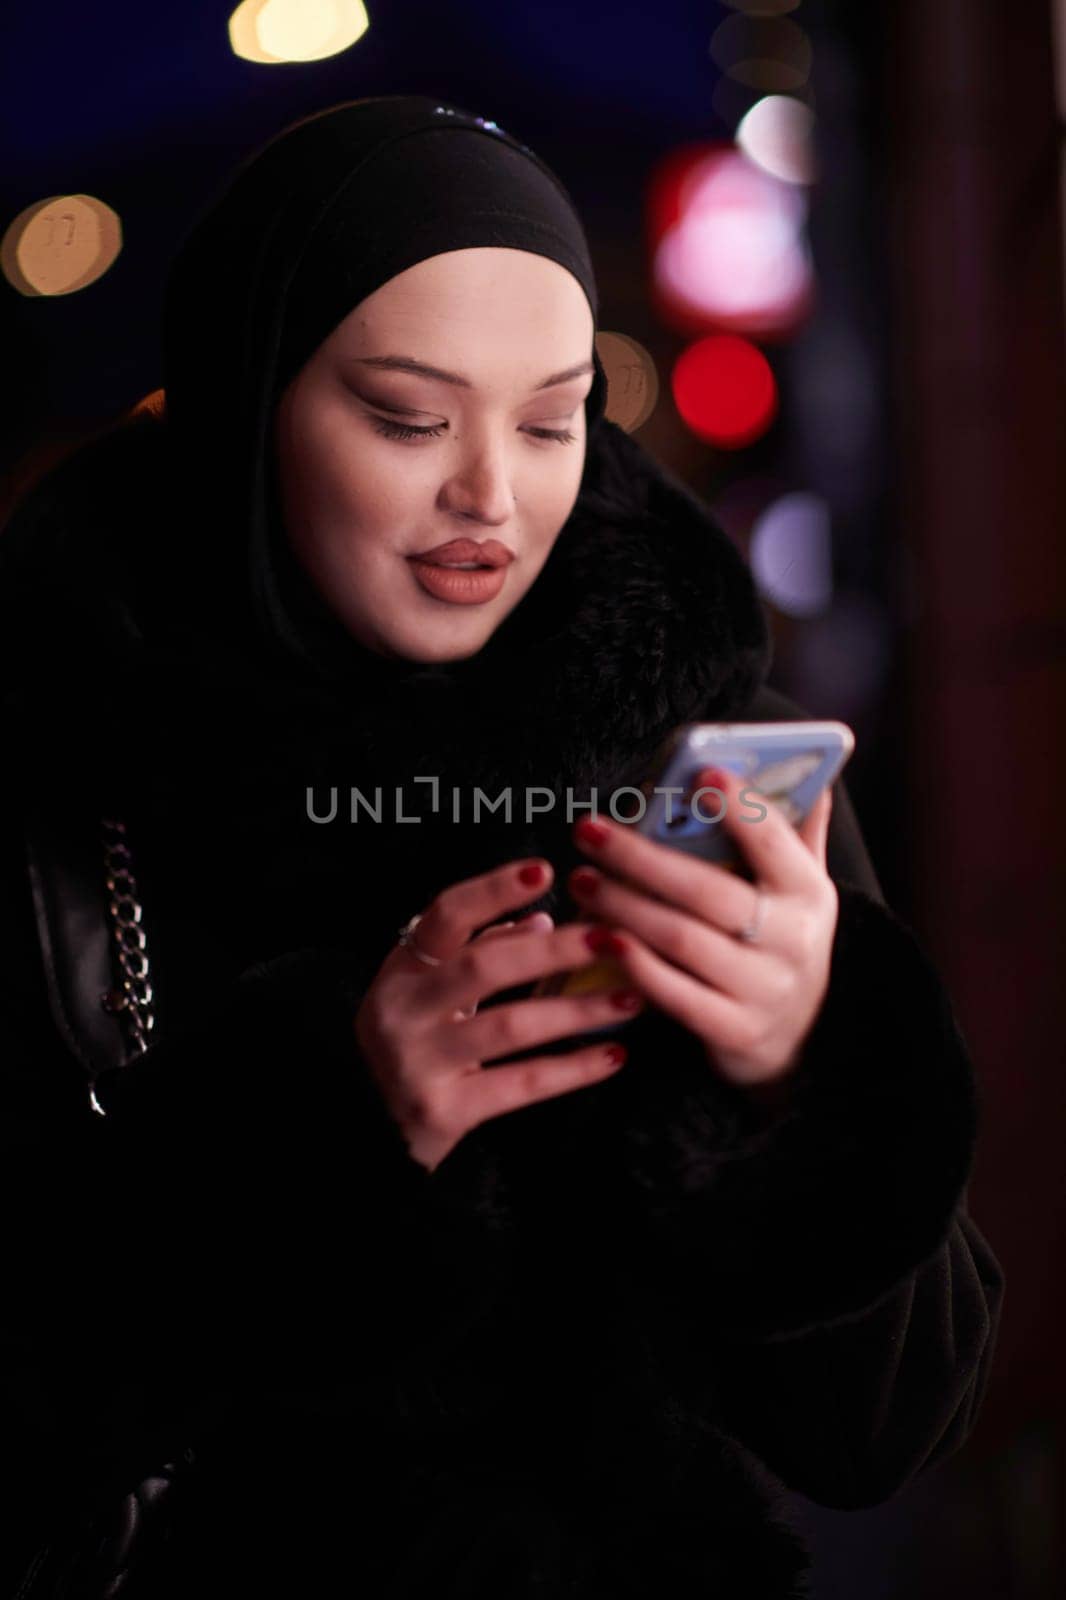 uropean Muslim Hijabi Business Lady checking her phone on urban city street at night by dotshock